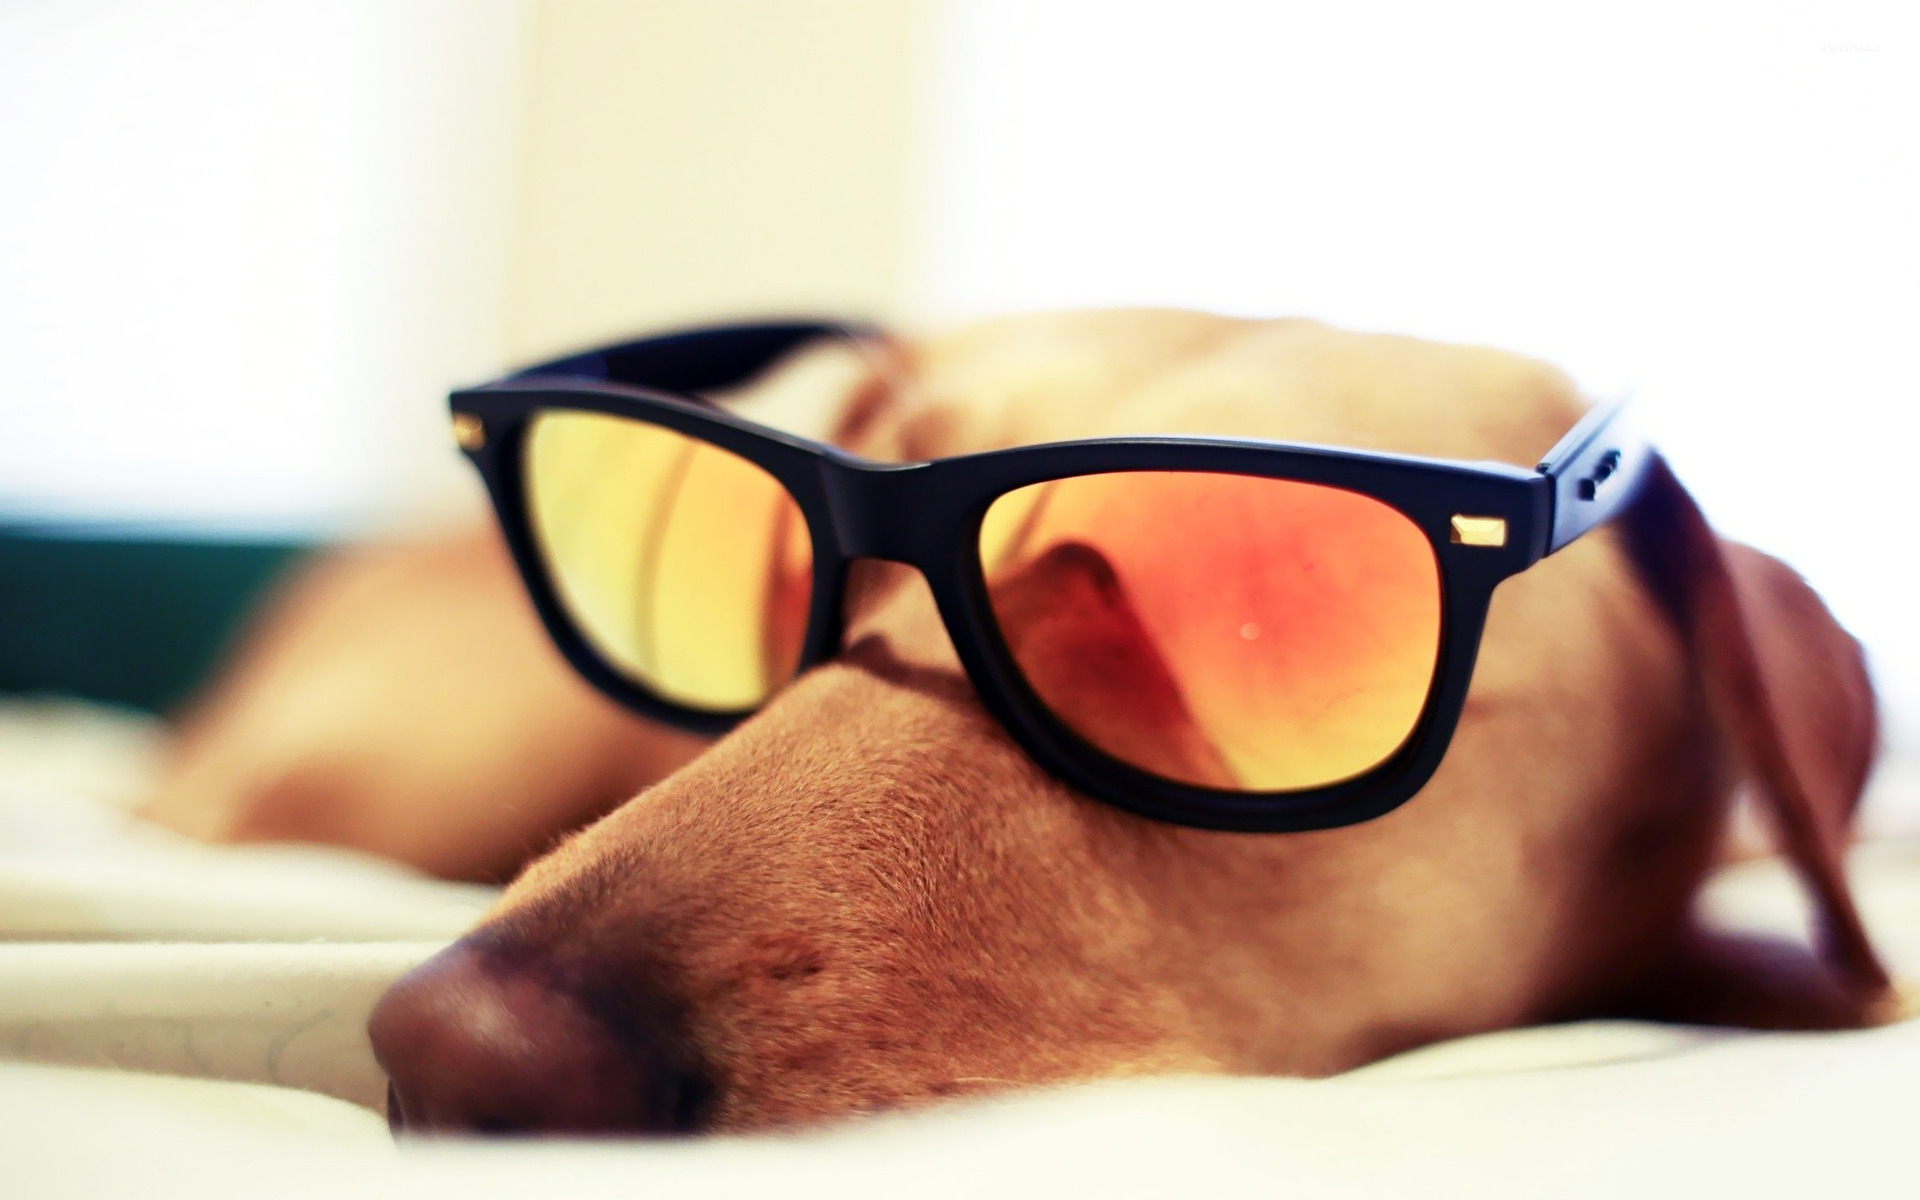 Dog Sleeping With Sunglasses Wallpaper Animal